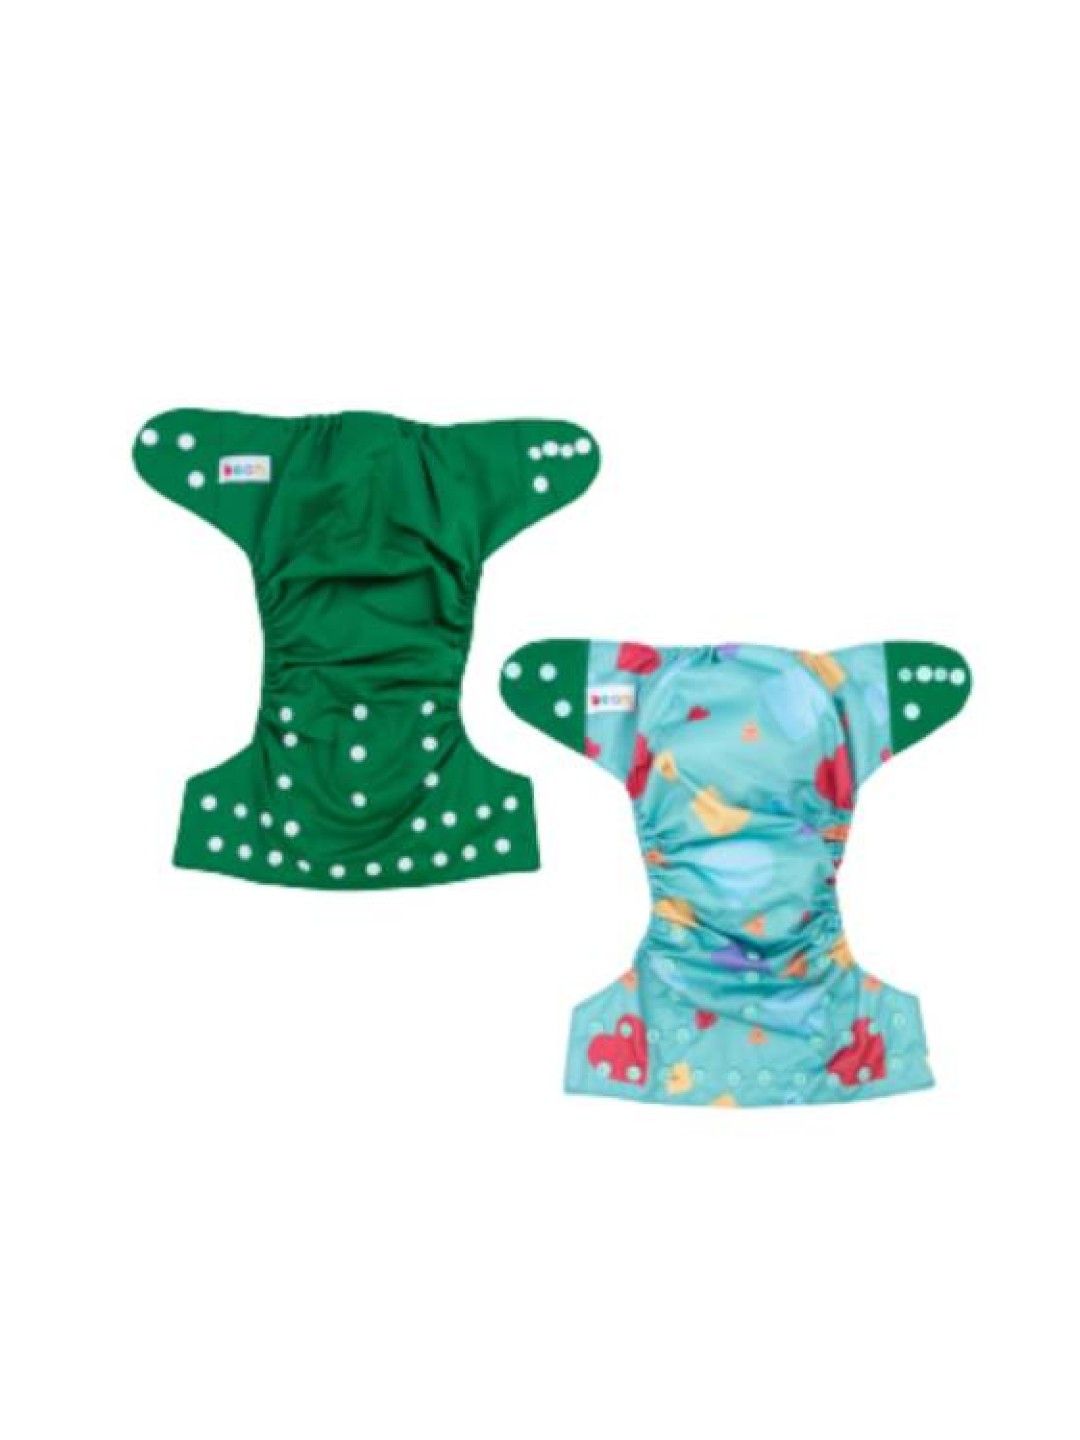 bean fashion Snappies Green Buddies Cloth Diaper Set of 2 (No Color- Image 2)